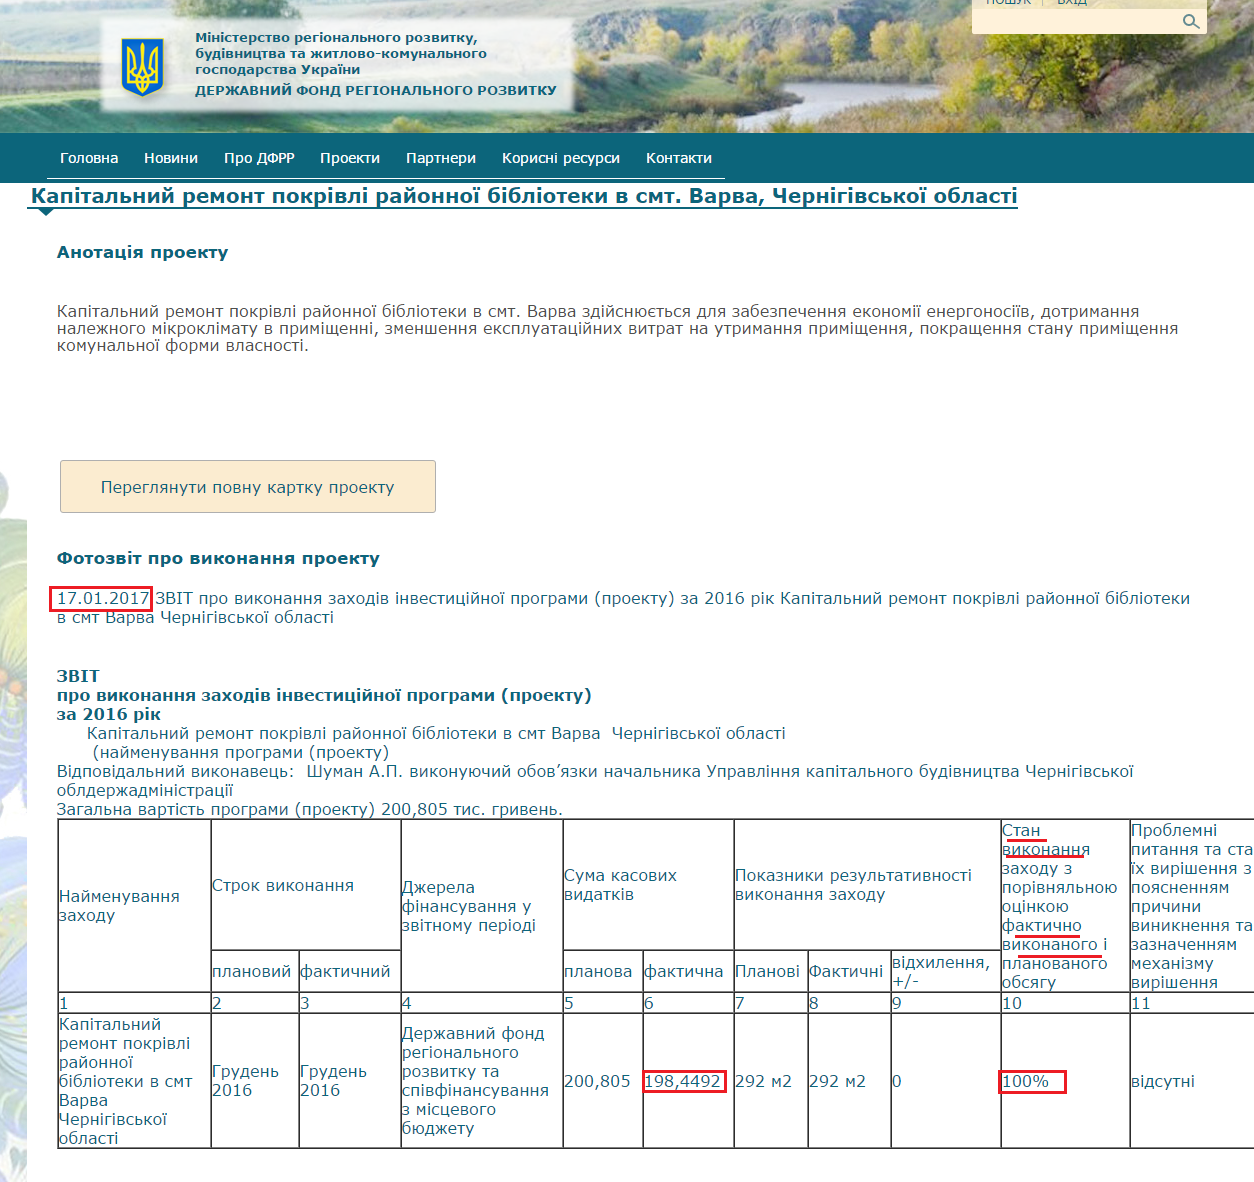 http://dfrr.minregion.gov.ua/Project-annotation?PROJT=4806